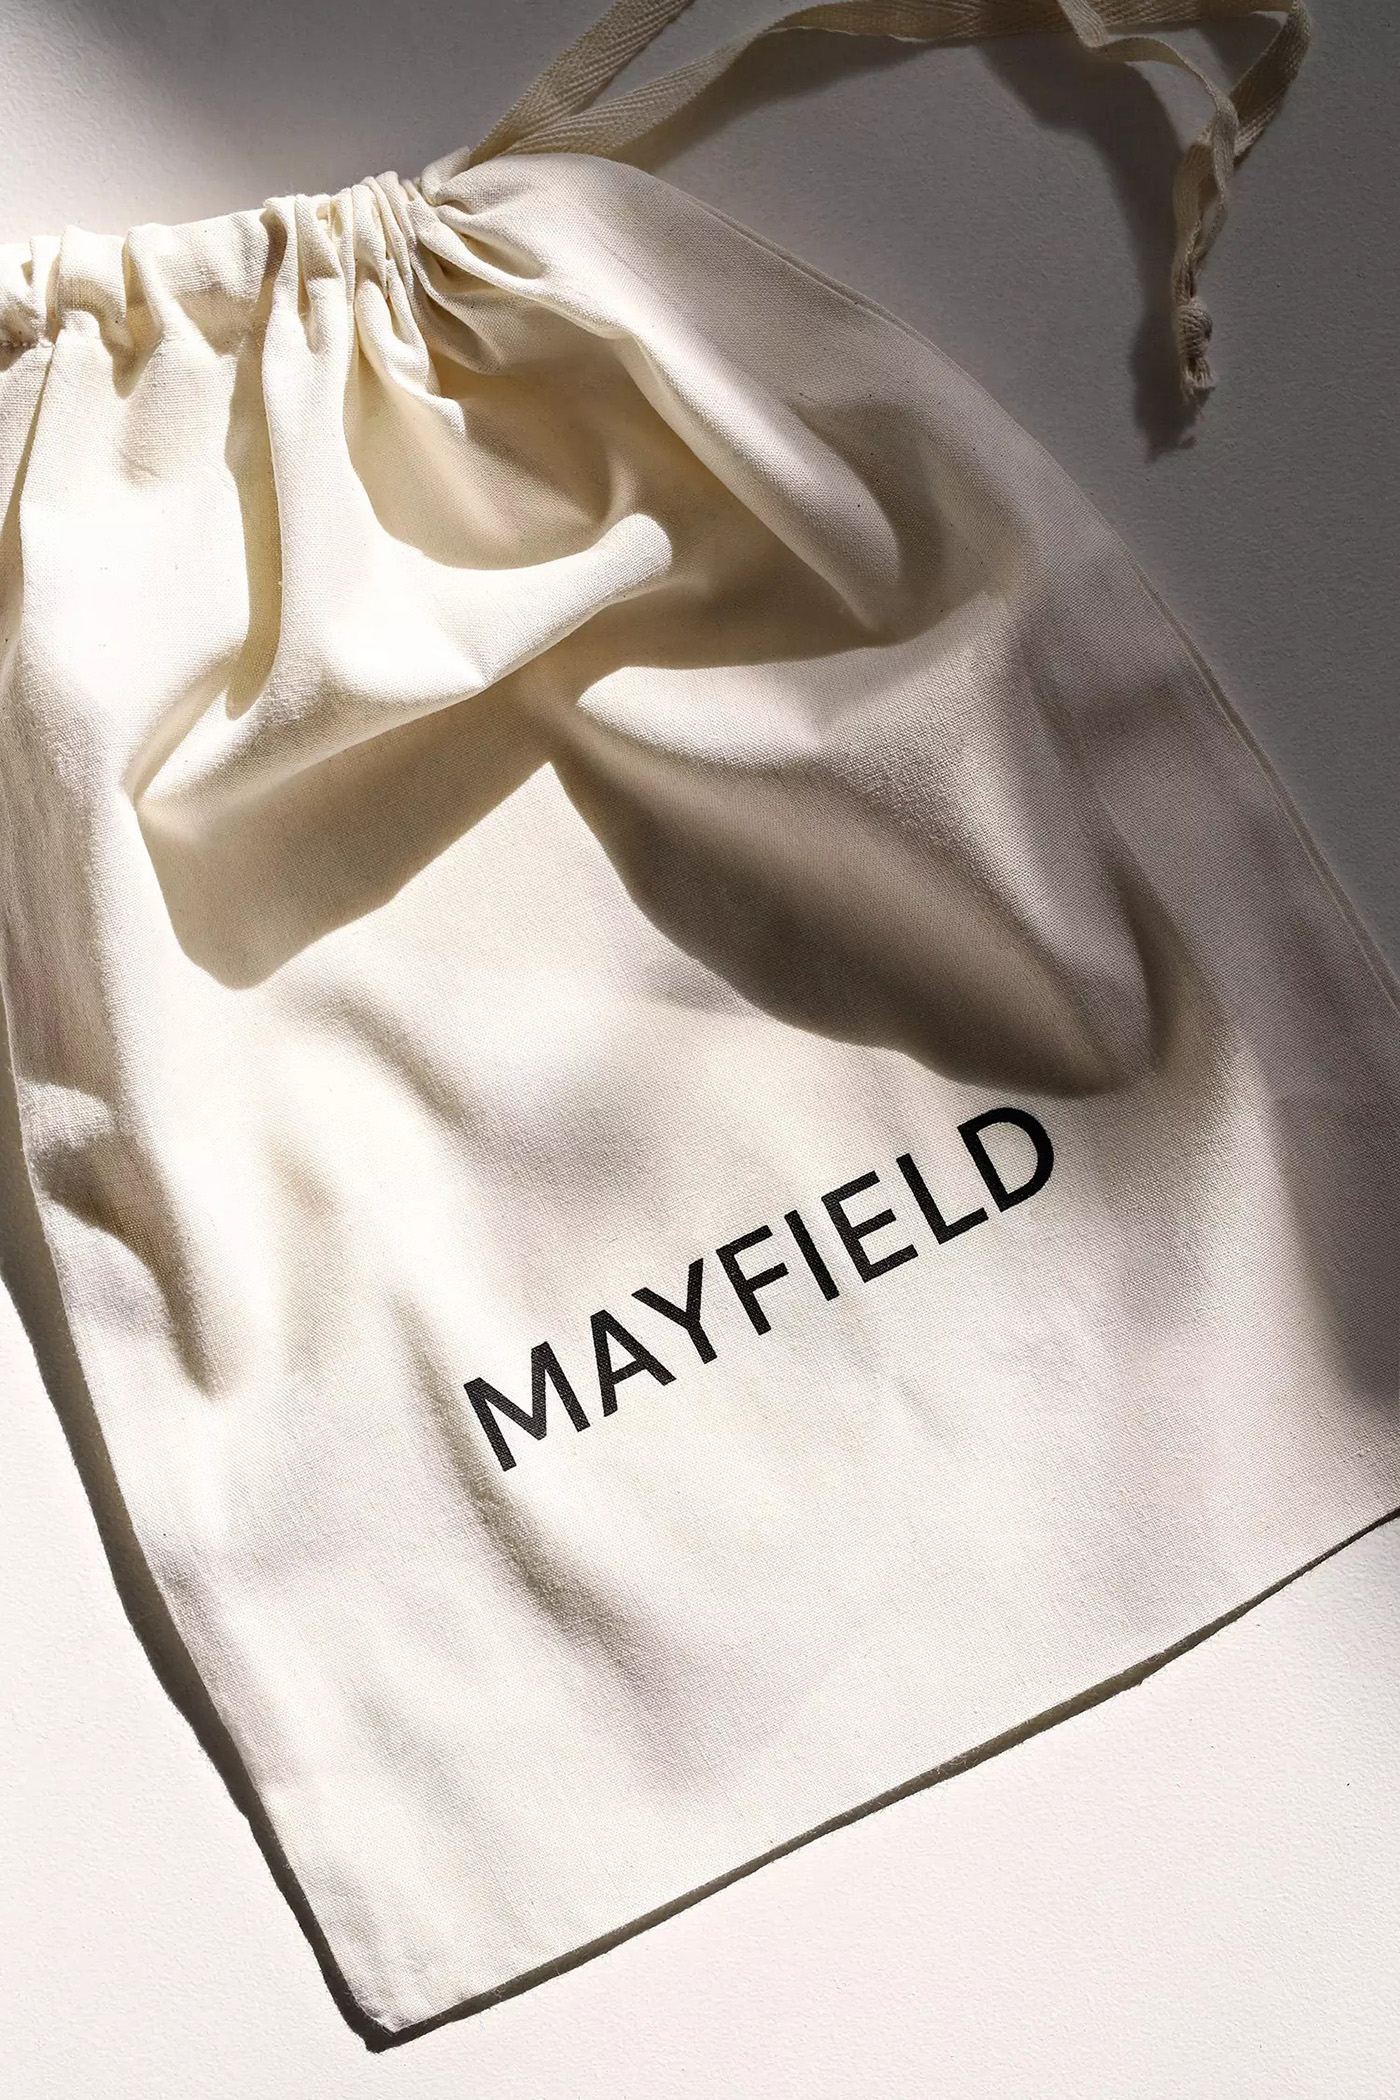 Mayfield服装店品牌视觉设计